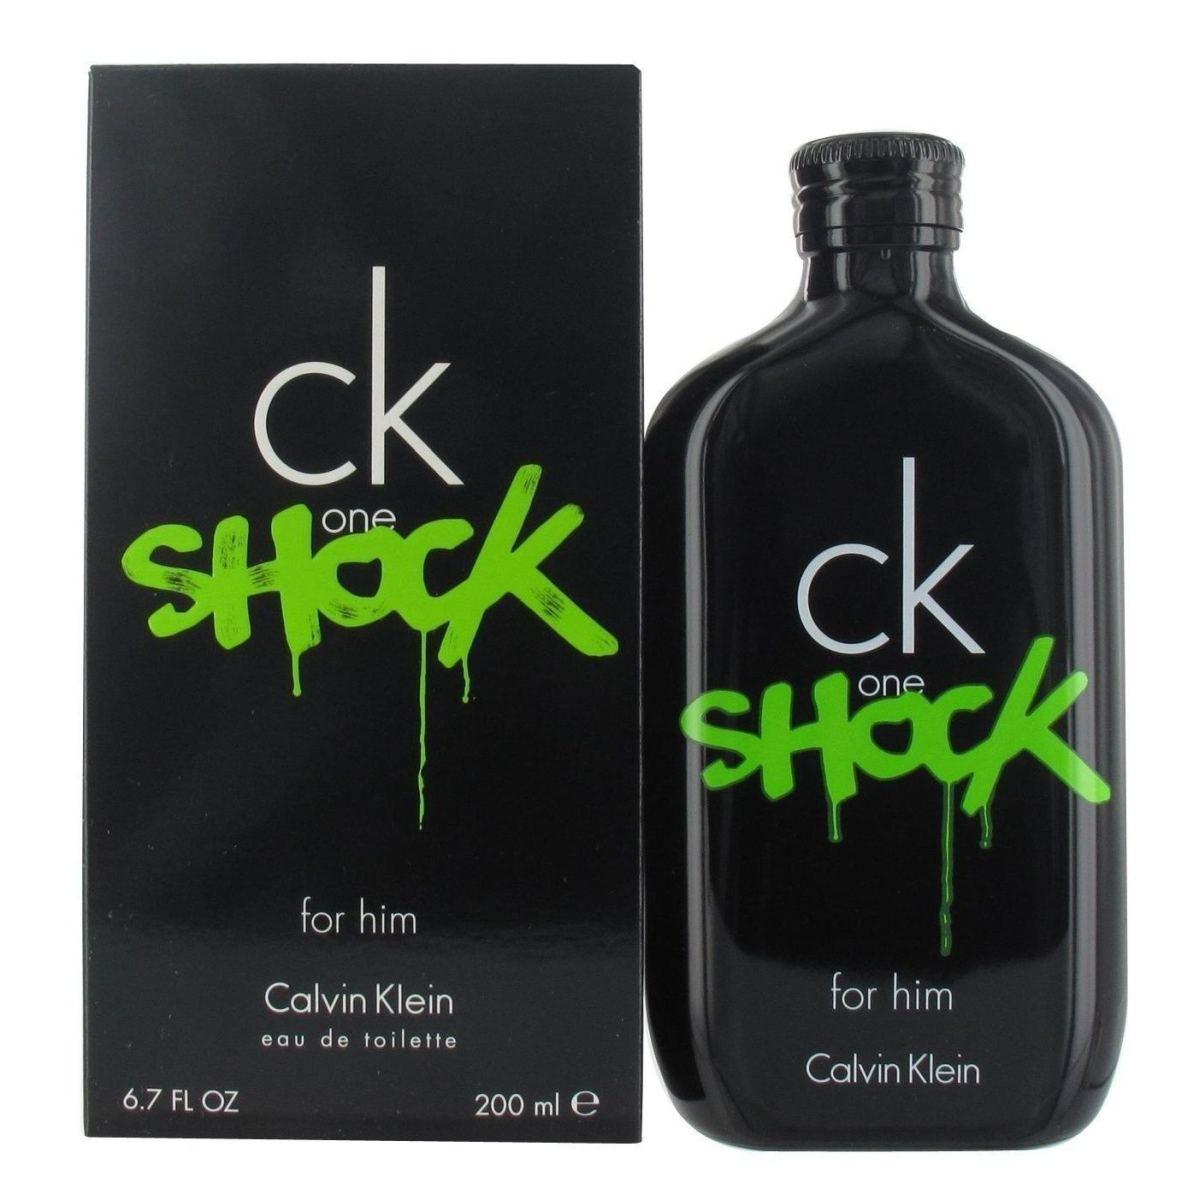 Ck One Shock 200 ml